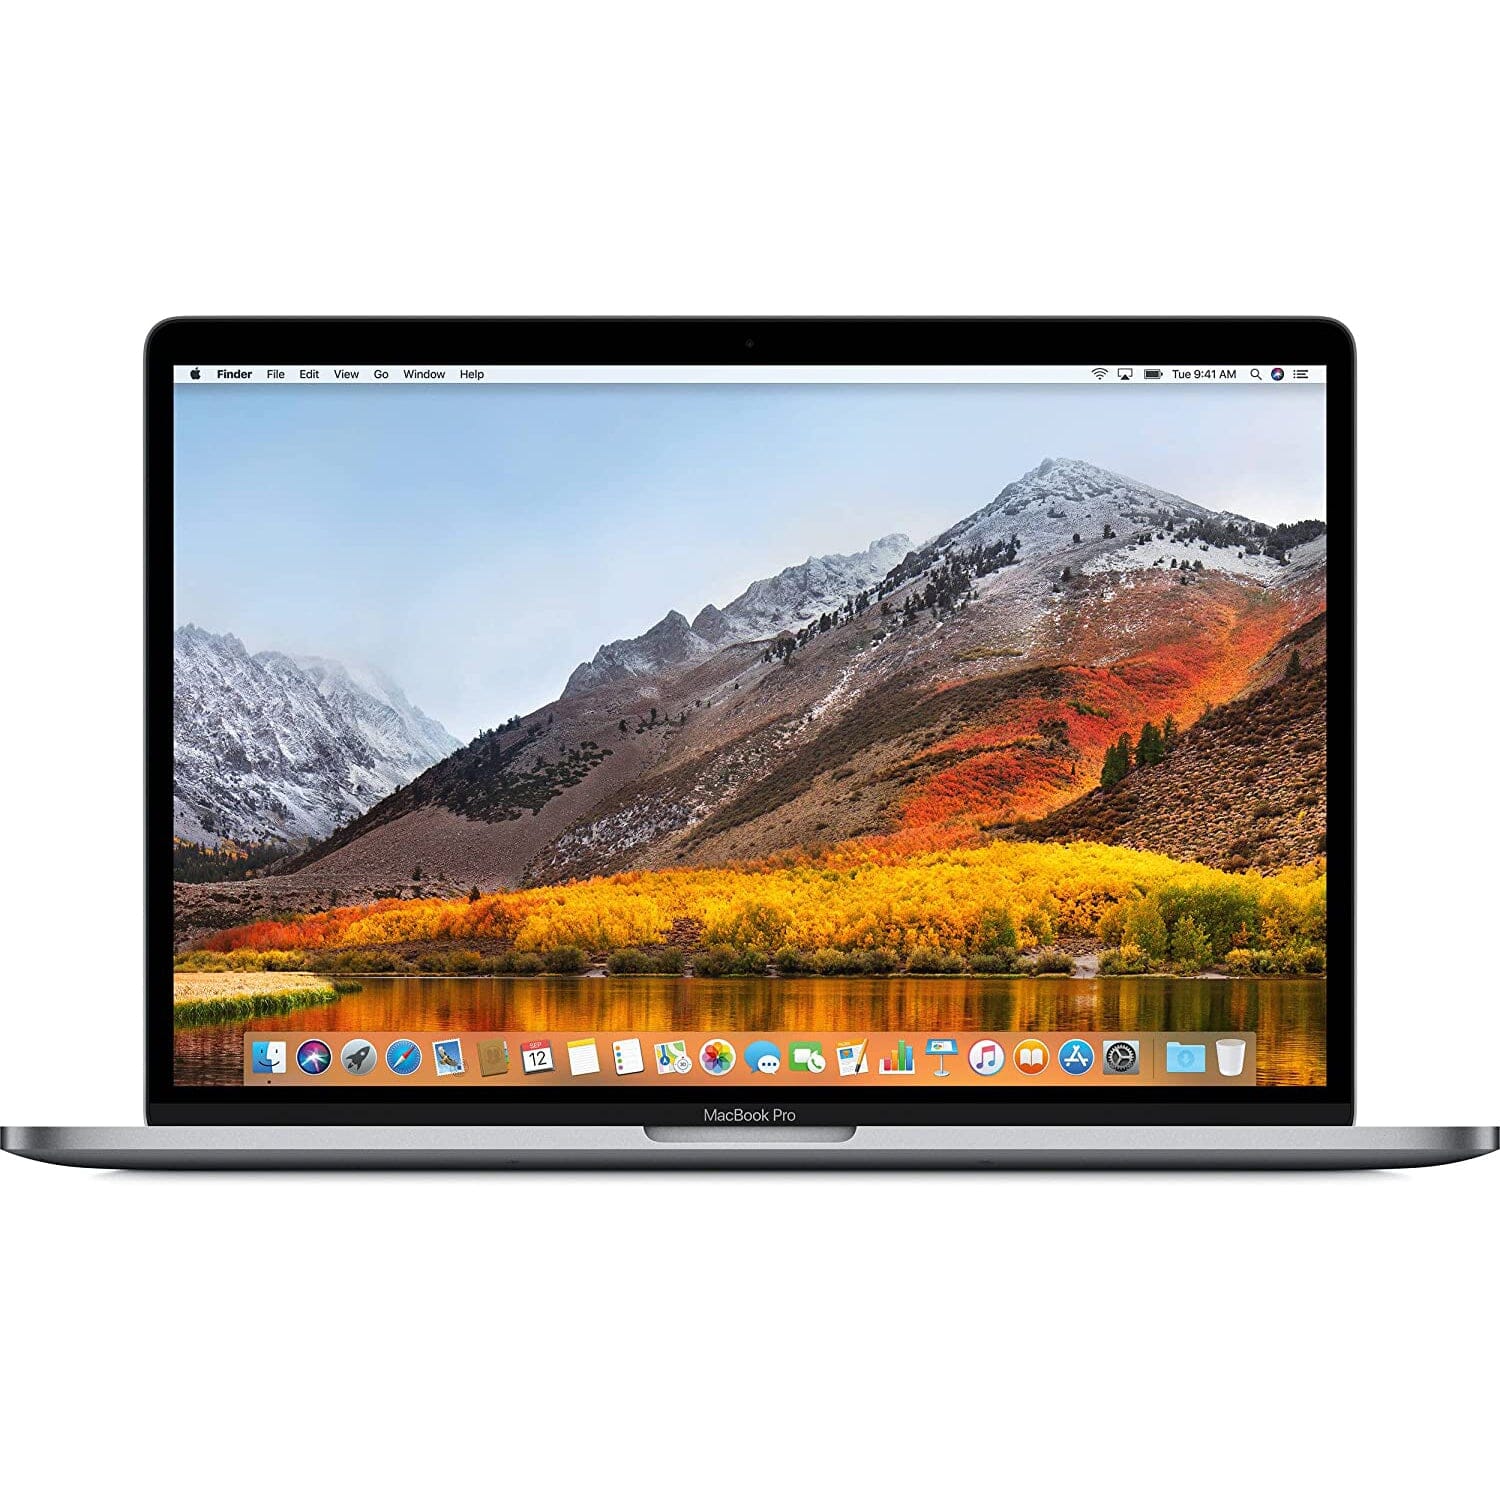 Apple MacBook Pro MR932LL/A 2.2Ghz i7 16GB RAM 256GB SSD (Refurbished)